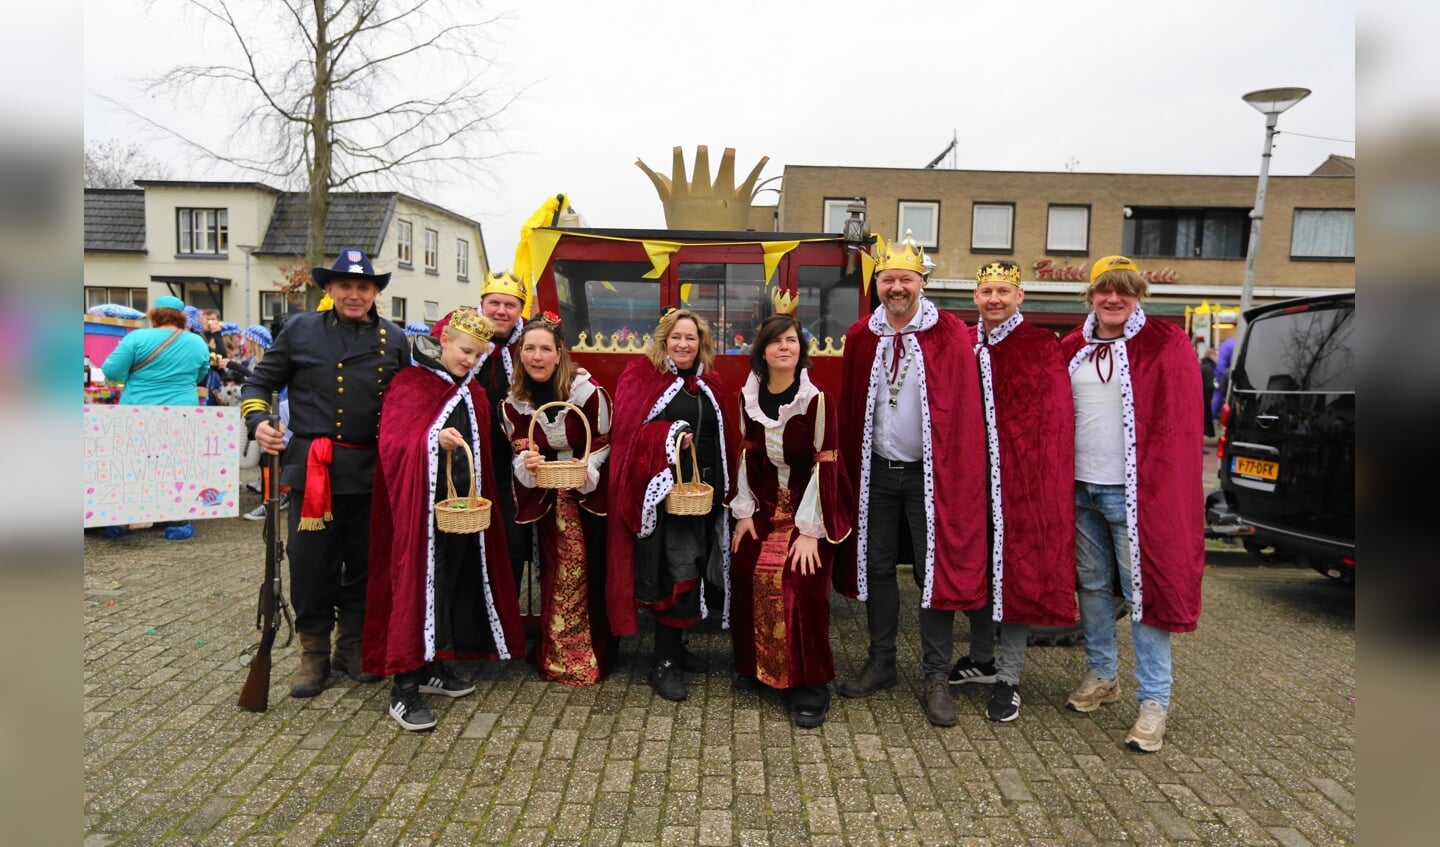 Auto Ridderhofgroep met Schutterskoning en -koningin. Foto: RTV Ideaal/ Albert Schreuder